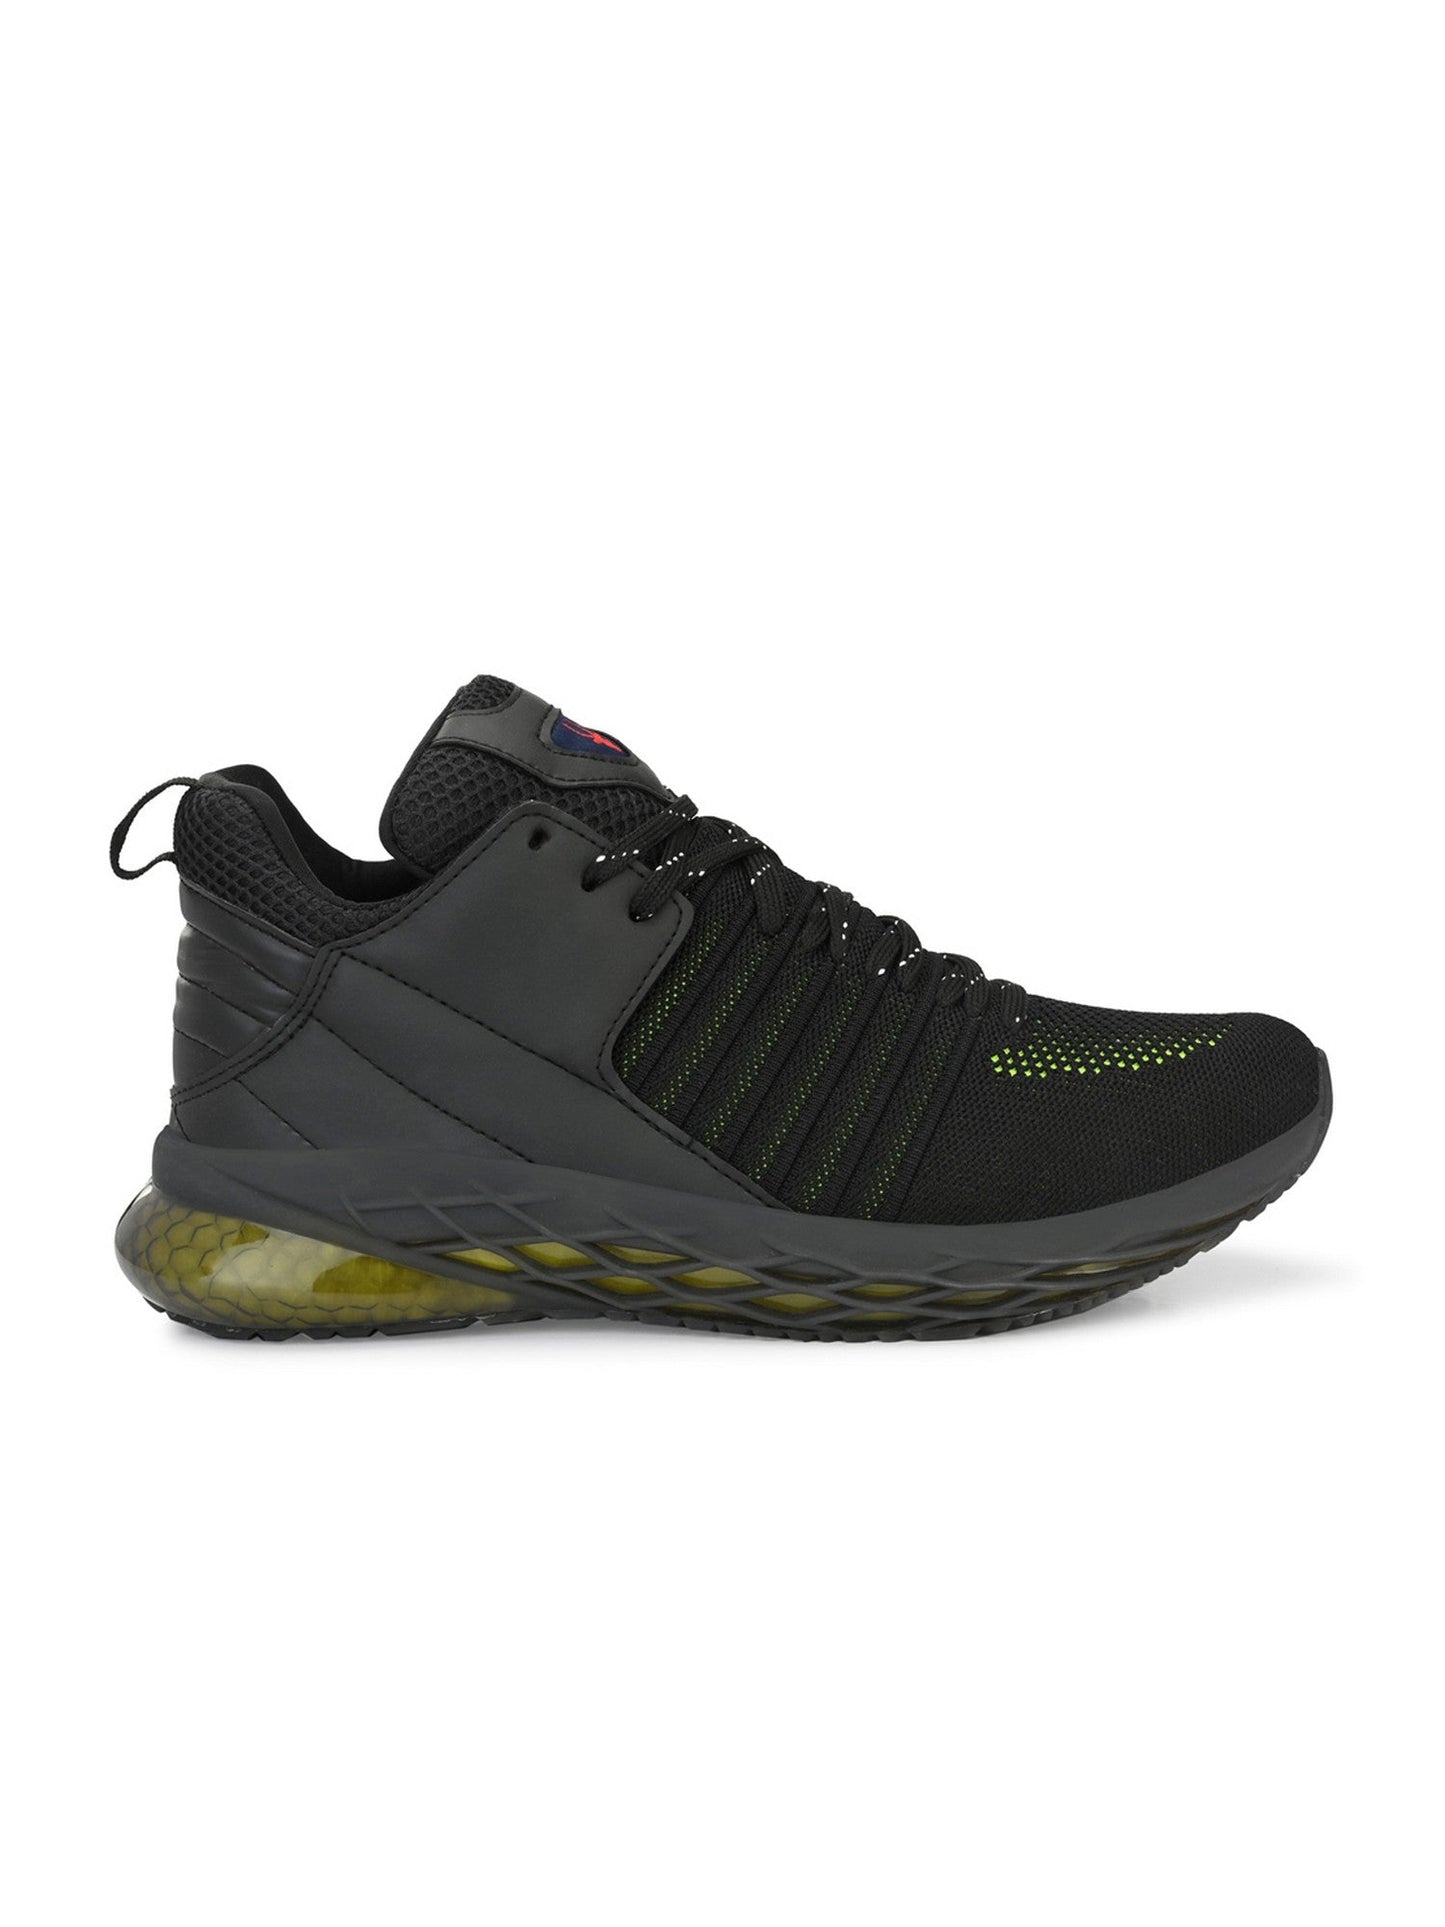 Hirolas® Men's Black/P.Green Elite Shock Absorbing Walking running Fitness Athletic Training Gym Ankle Fashion Lace Up Sneaker Sport Shoes (HRLMP03BLK)